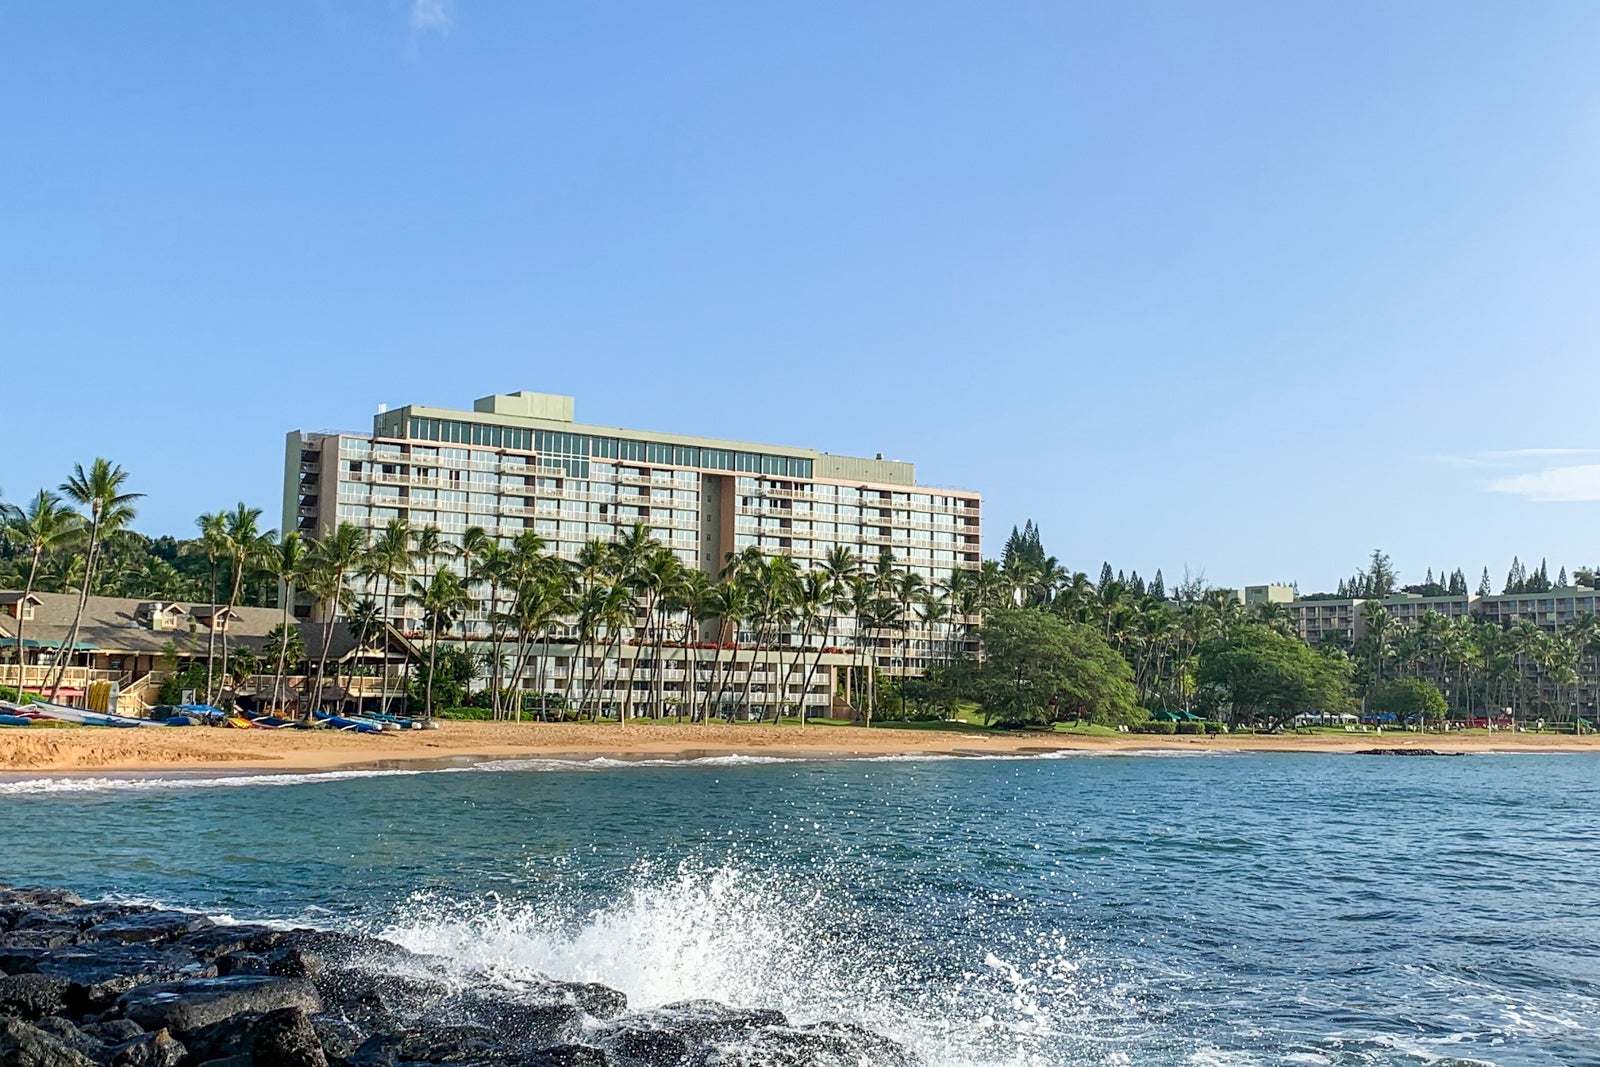 Kauai considers charging tourists for beach parking